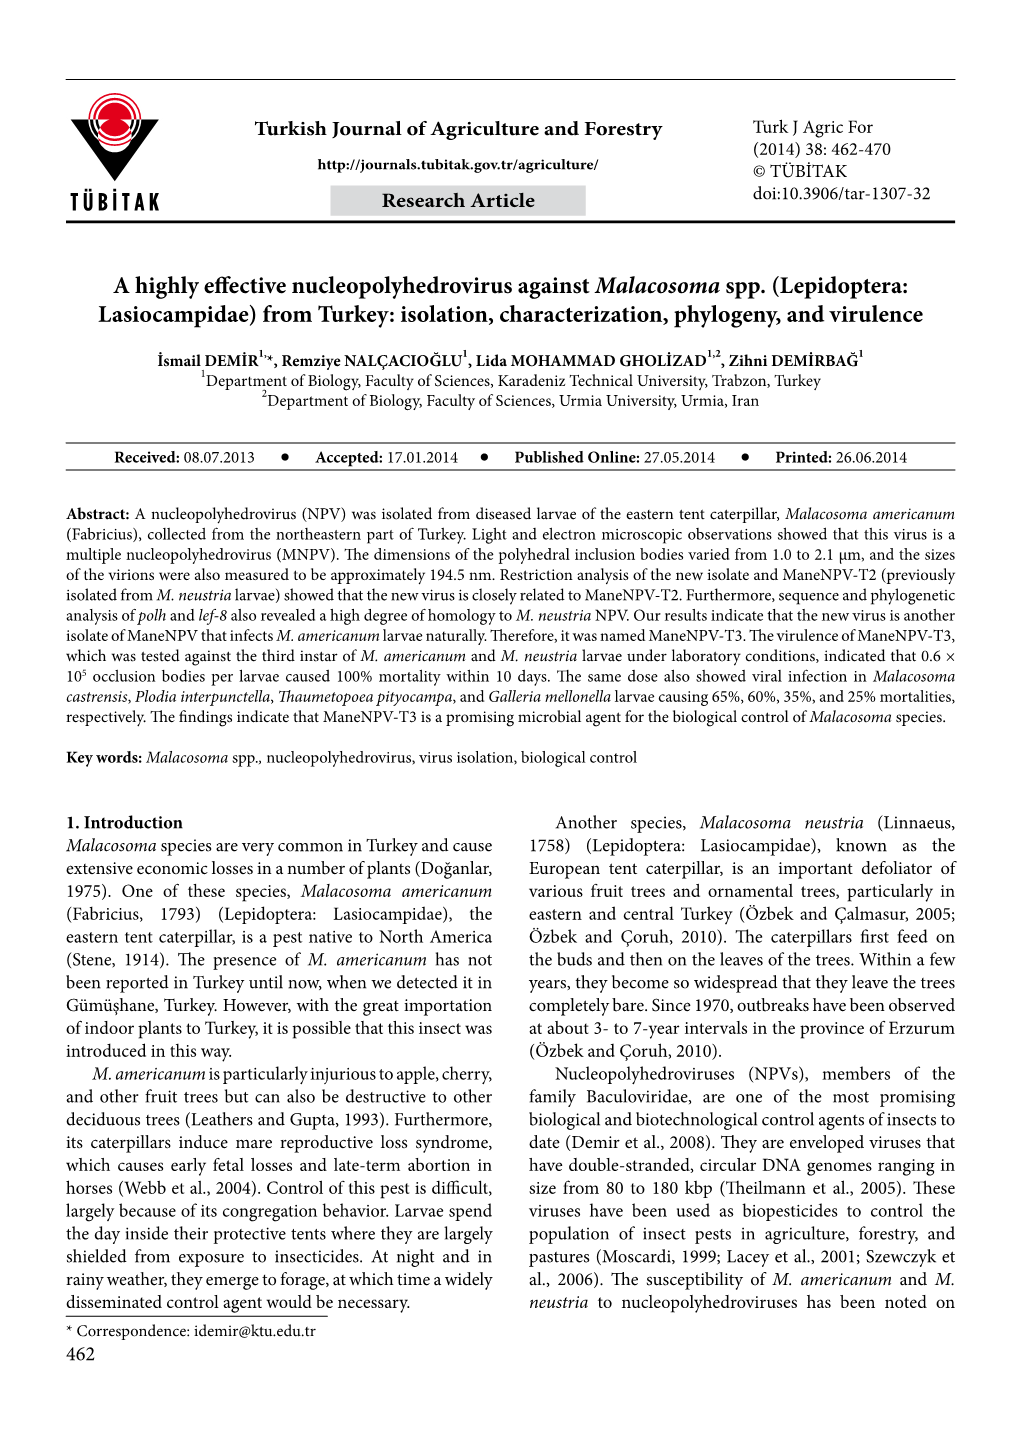 A Highly Effective Nucleopolyhedrovirus Against Malacosoma Spp